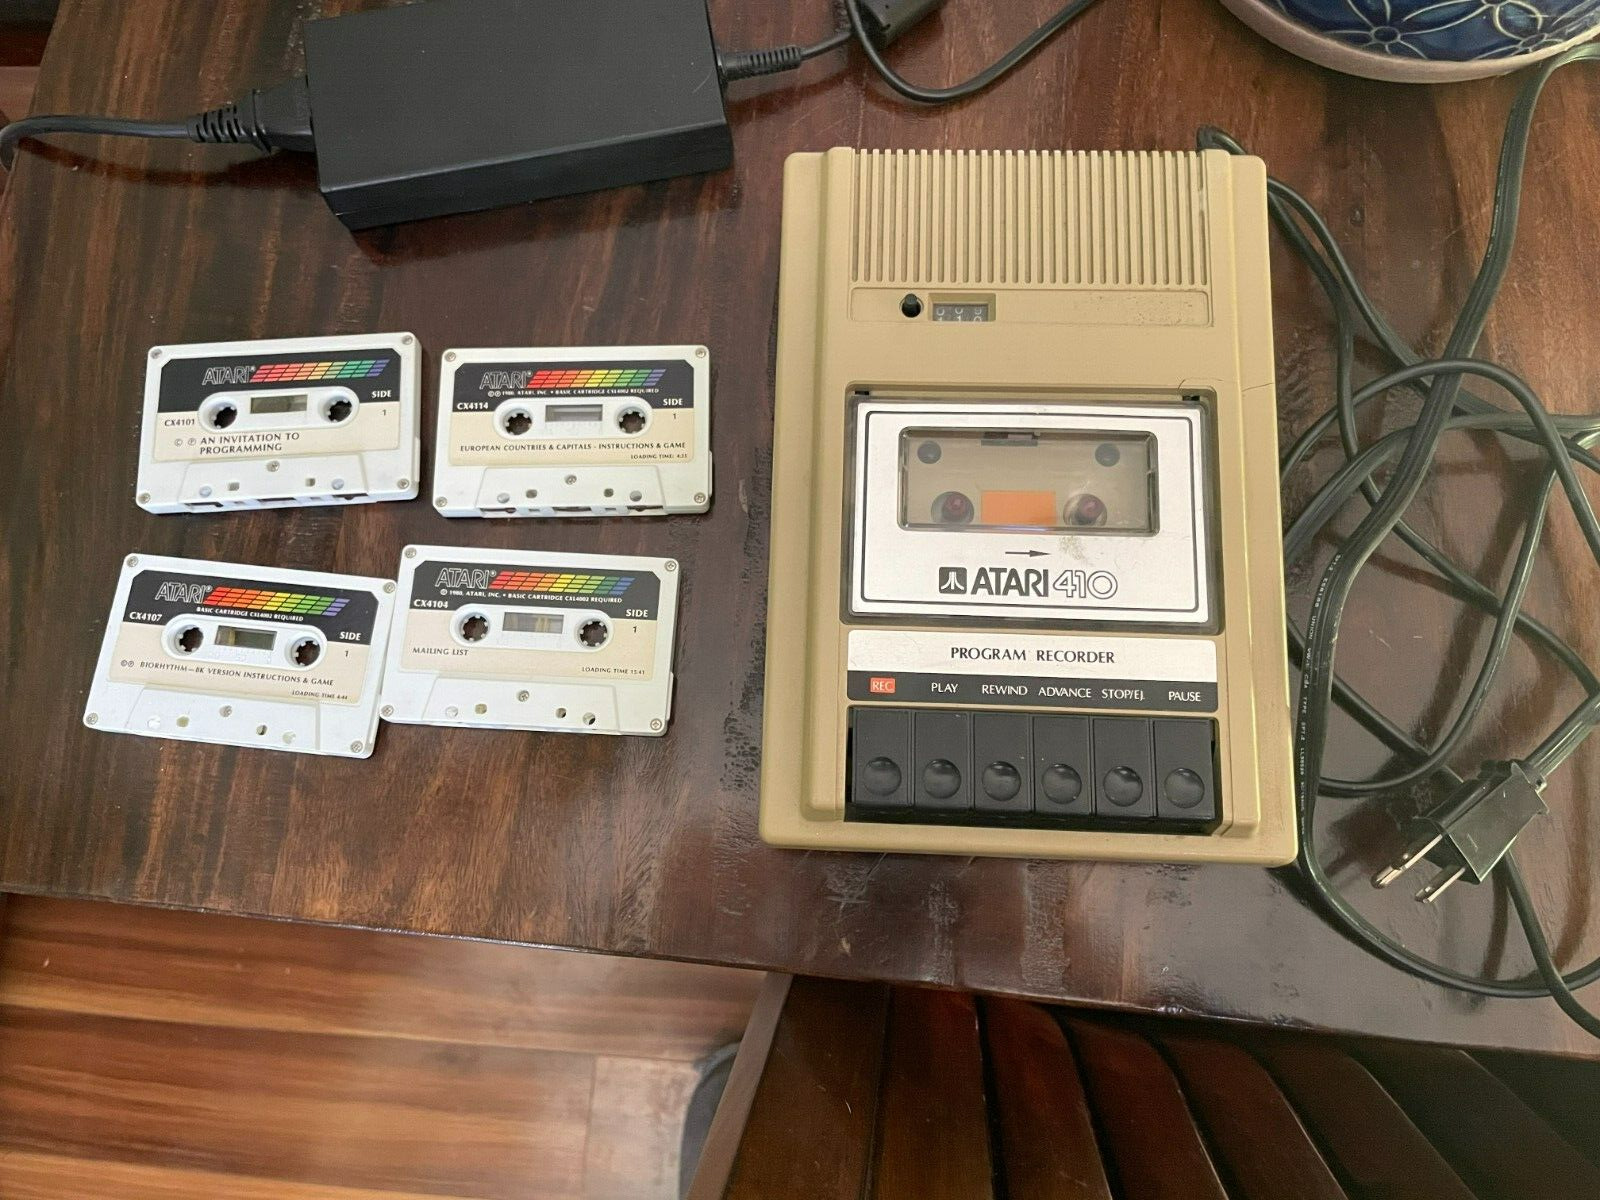 Atari 410 Data Cassette Program Recorder for Atari 400 / 800 with cassettes